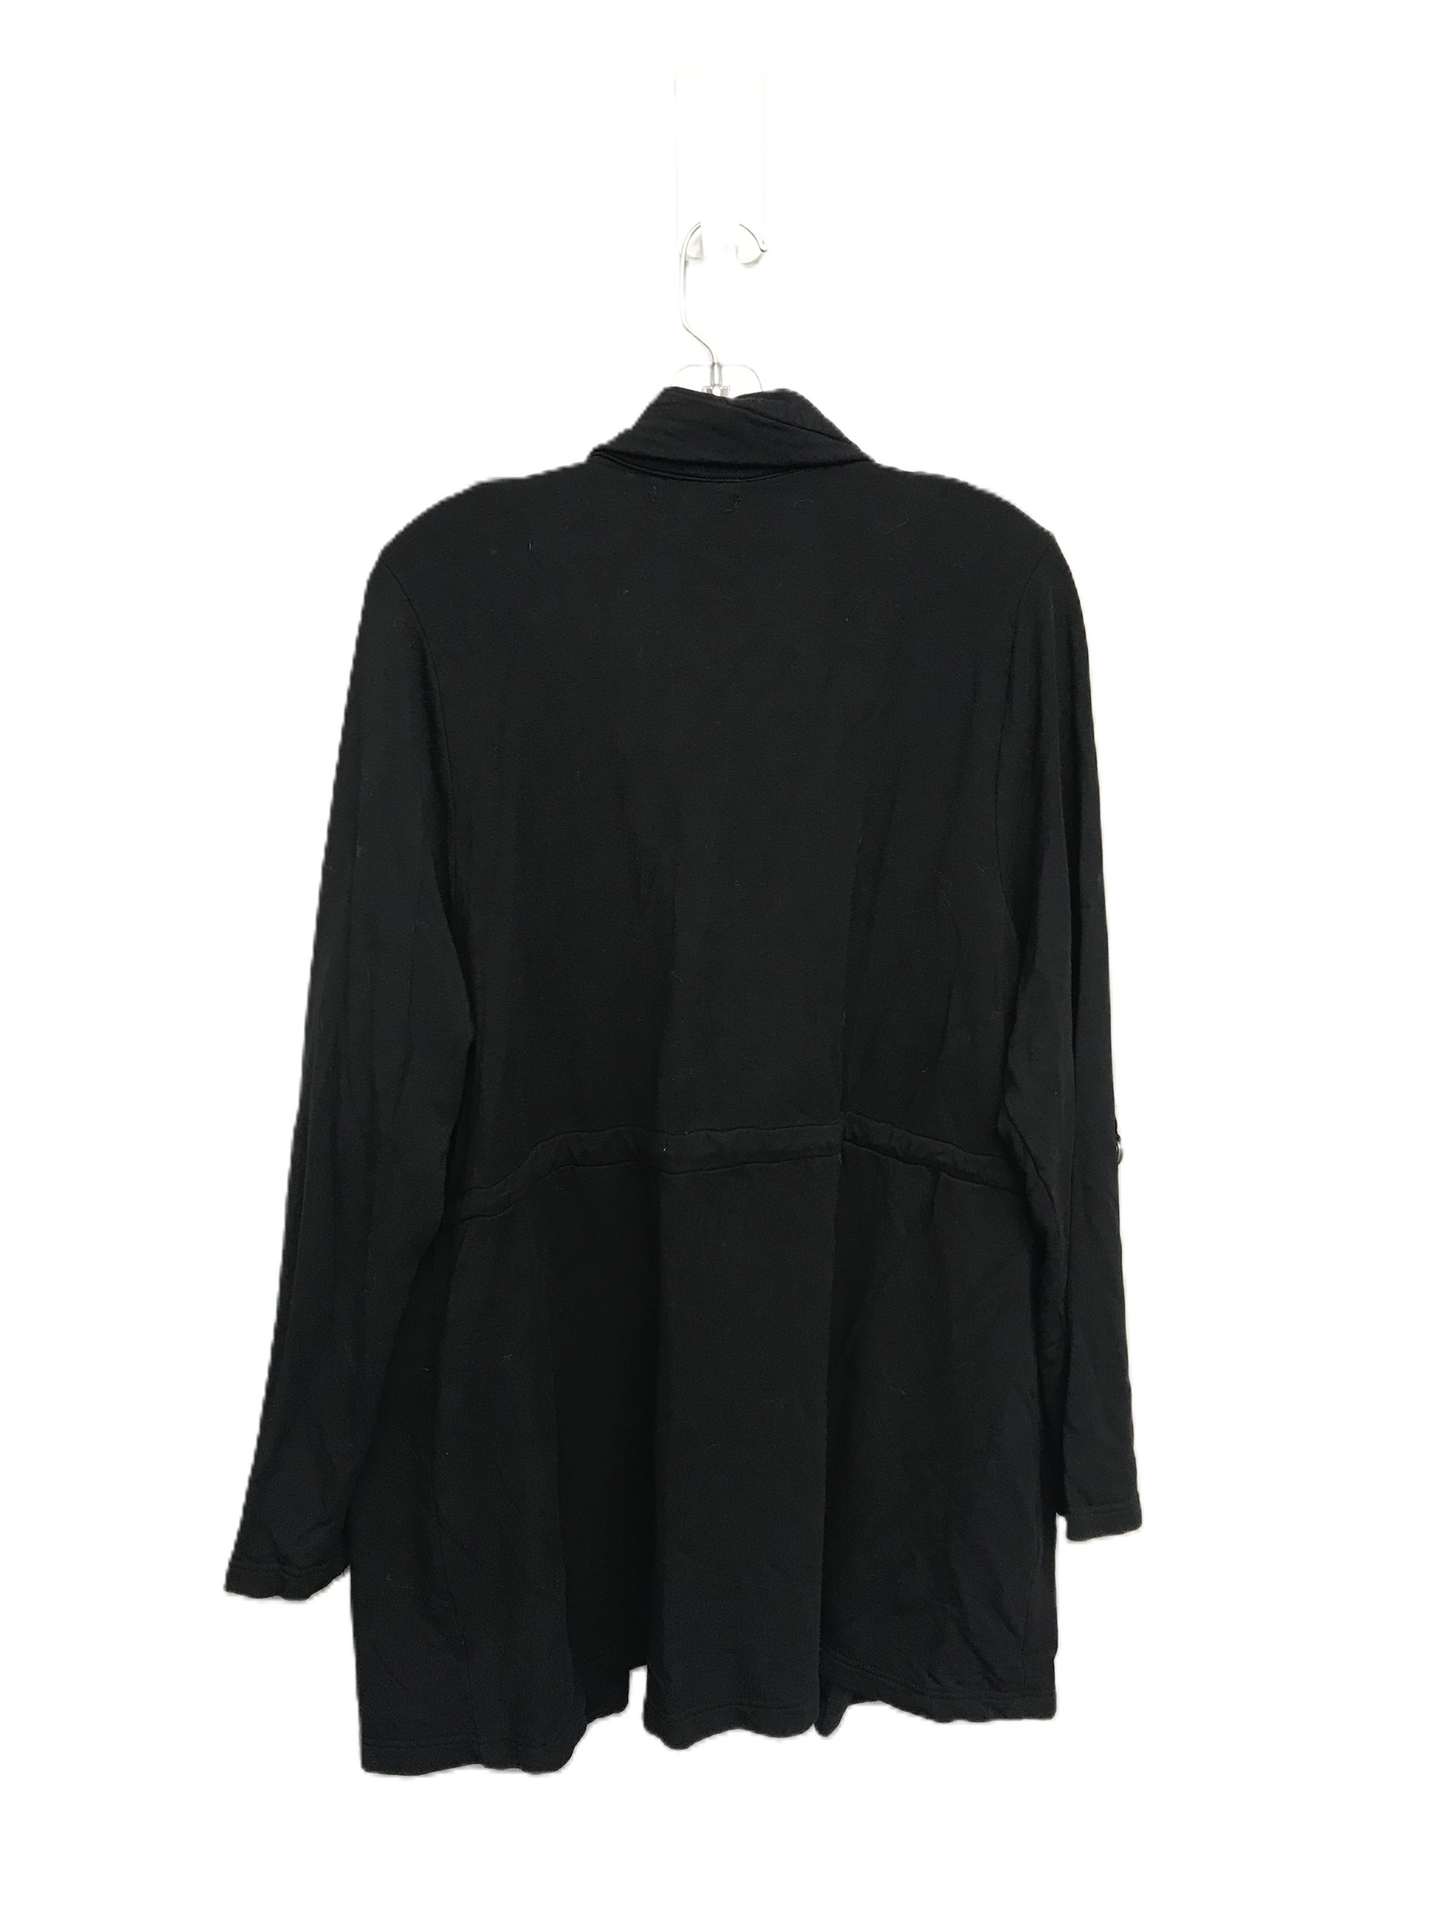 Black Sweater Cardigan By Torrid, Size: 3x